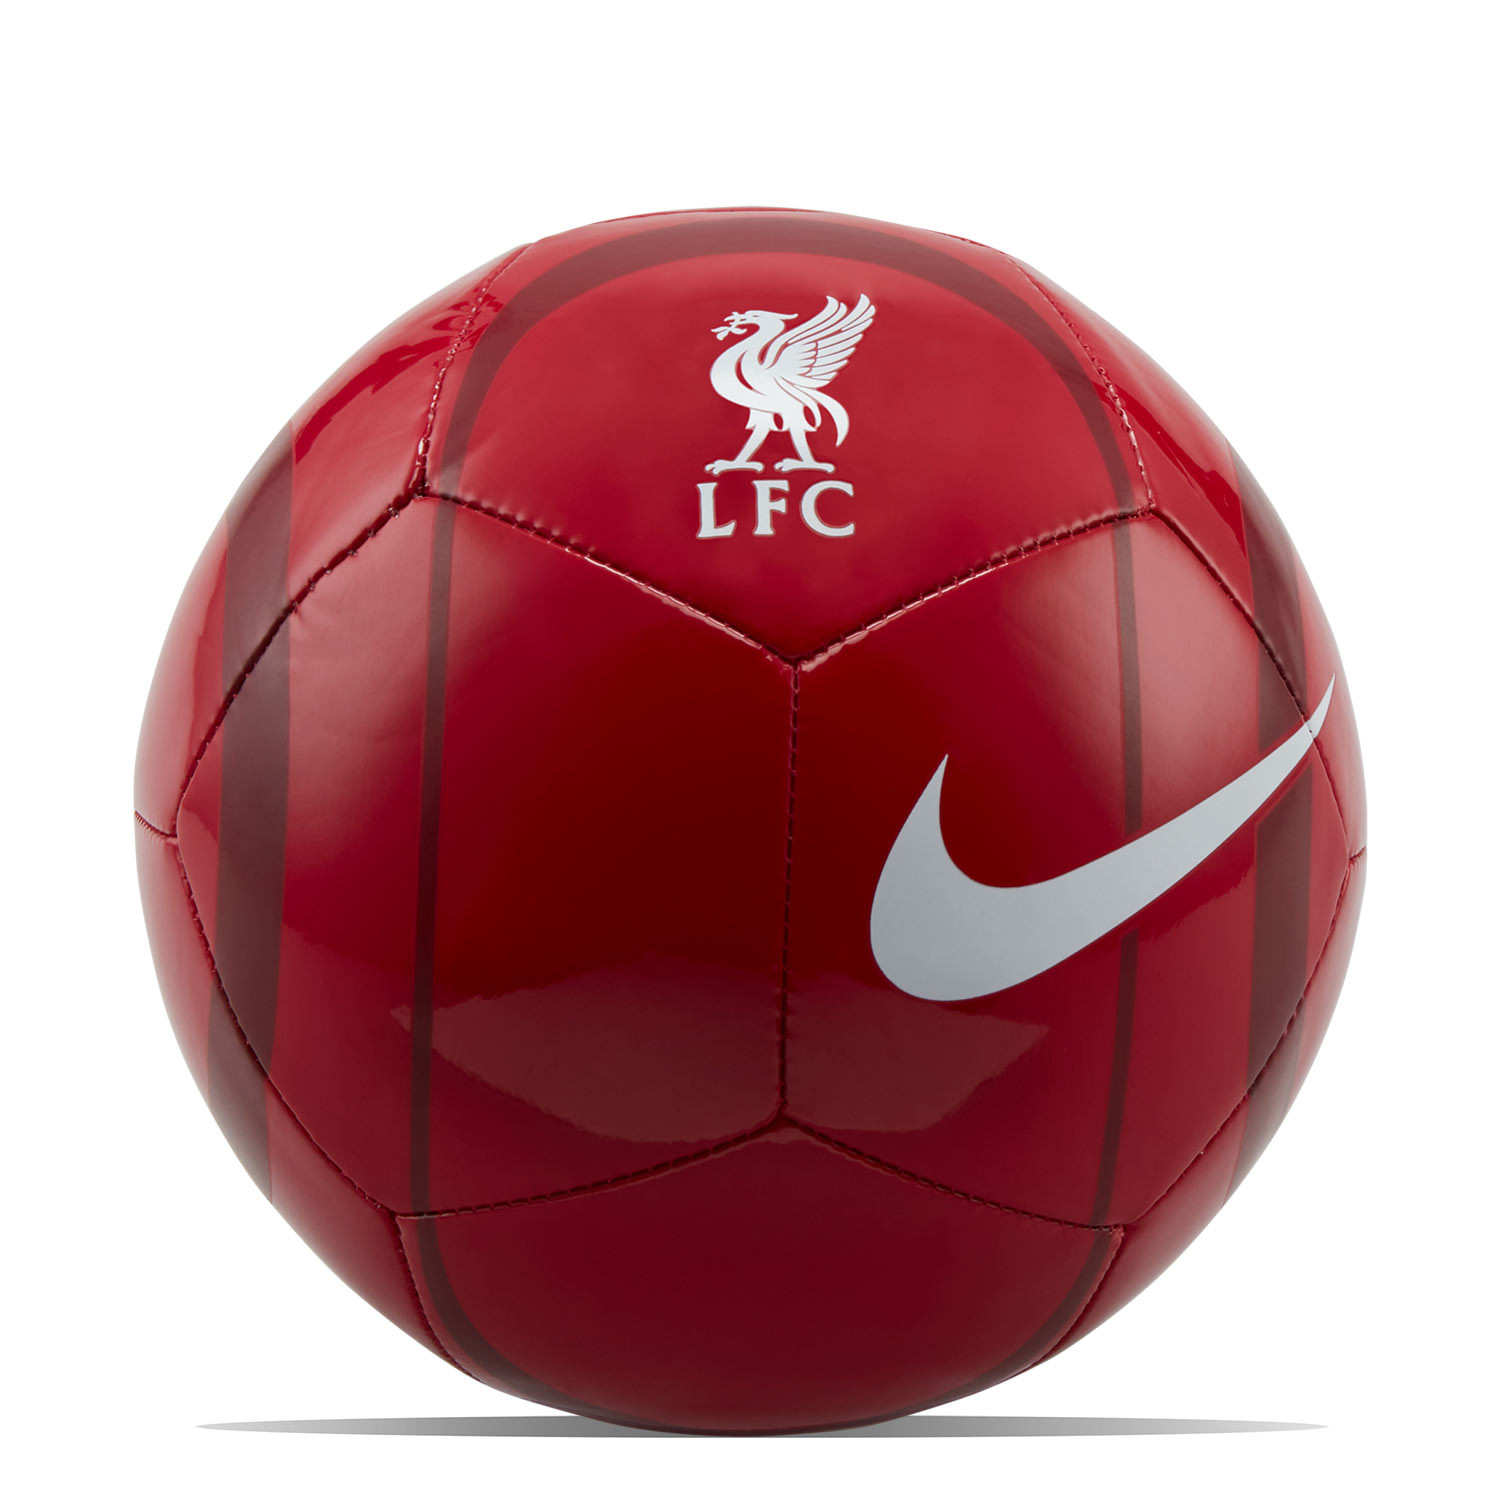 Gruñón Trastornado Y así Balón Nike Liverpool Skills talla mini rojo | futbolmania